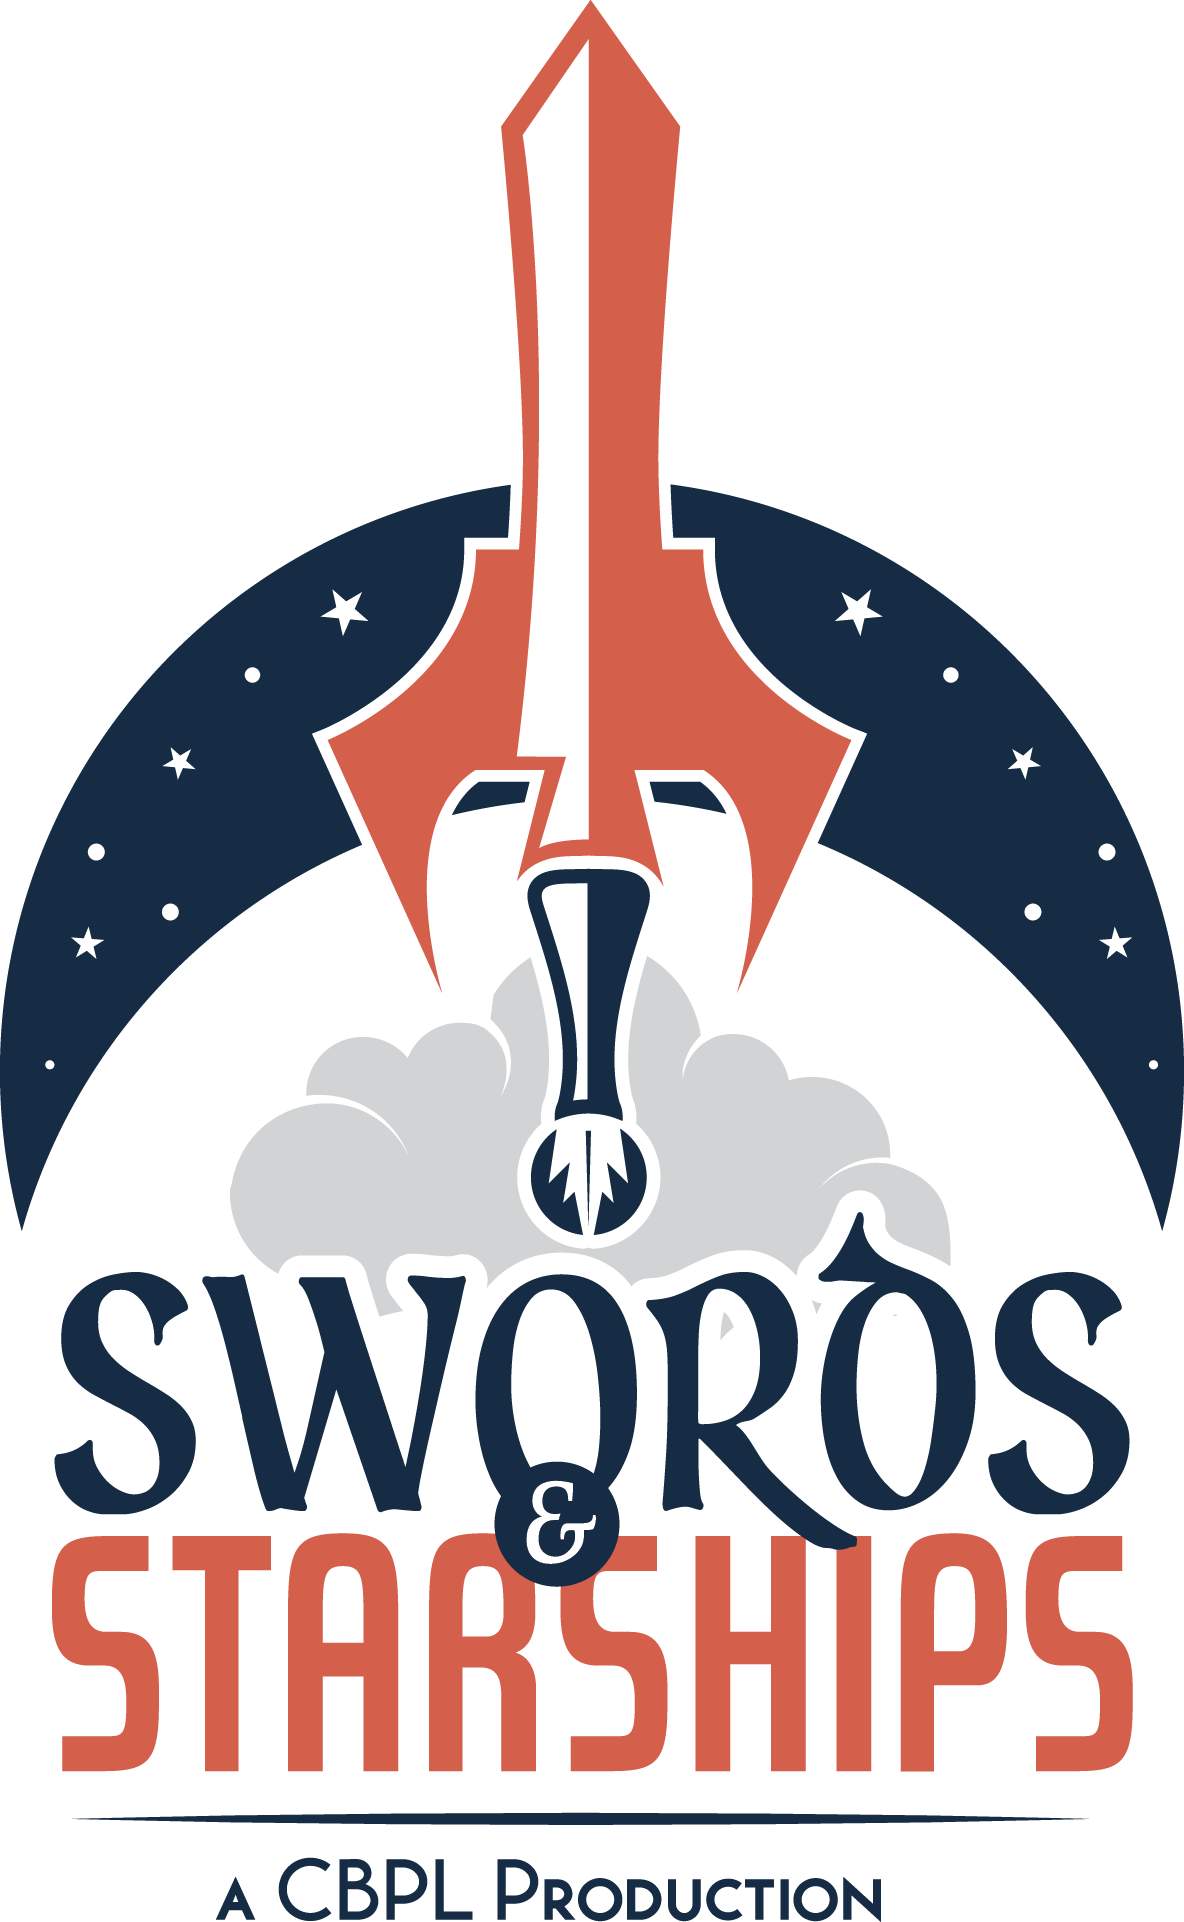 Swords and Starships Podcast Season 2